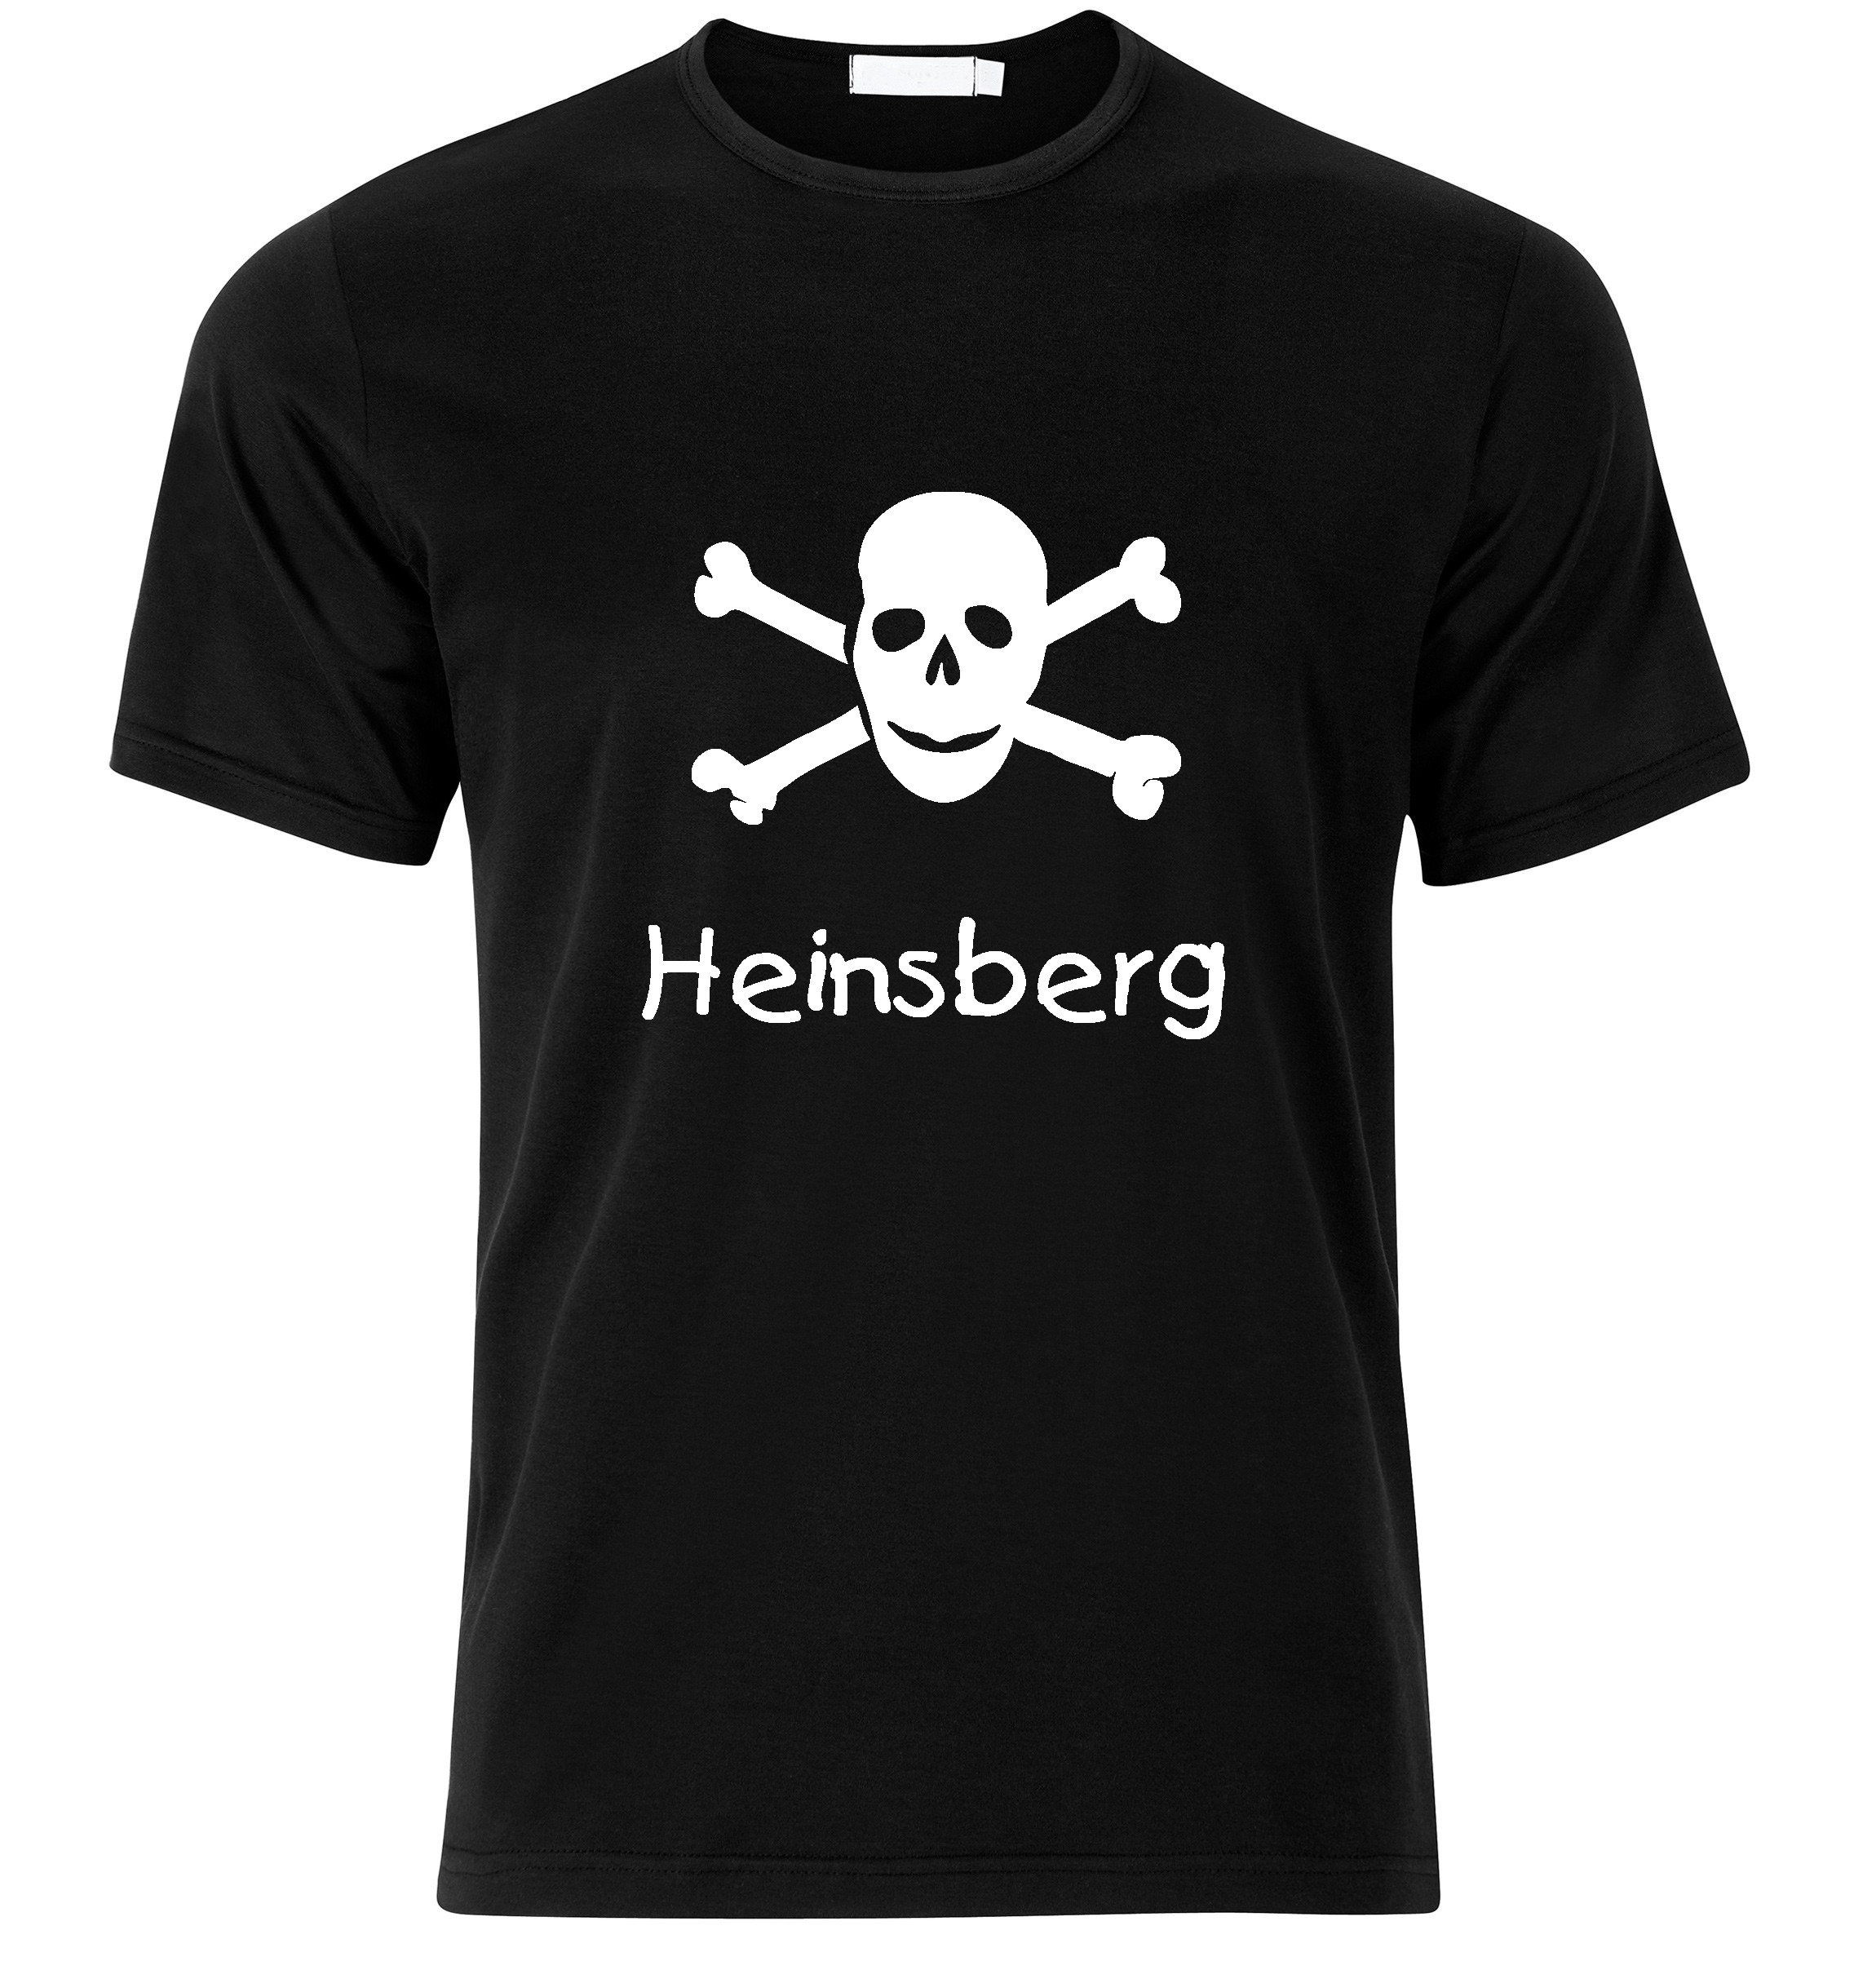 T-Shirt Heinsberg Jolly Roger, Totenkopf